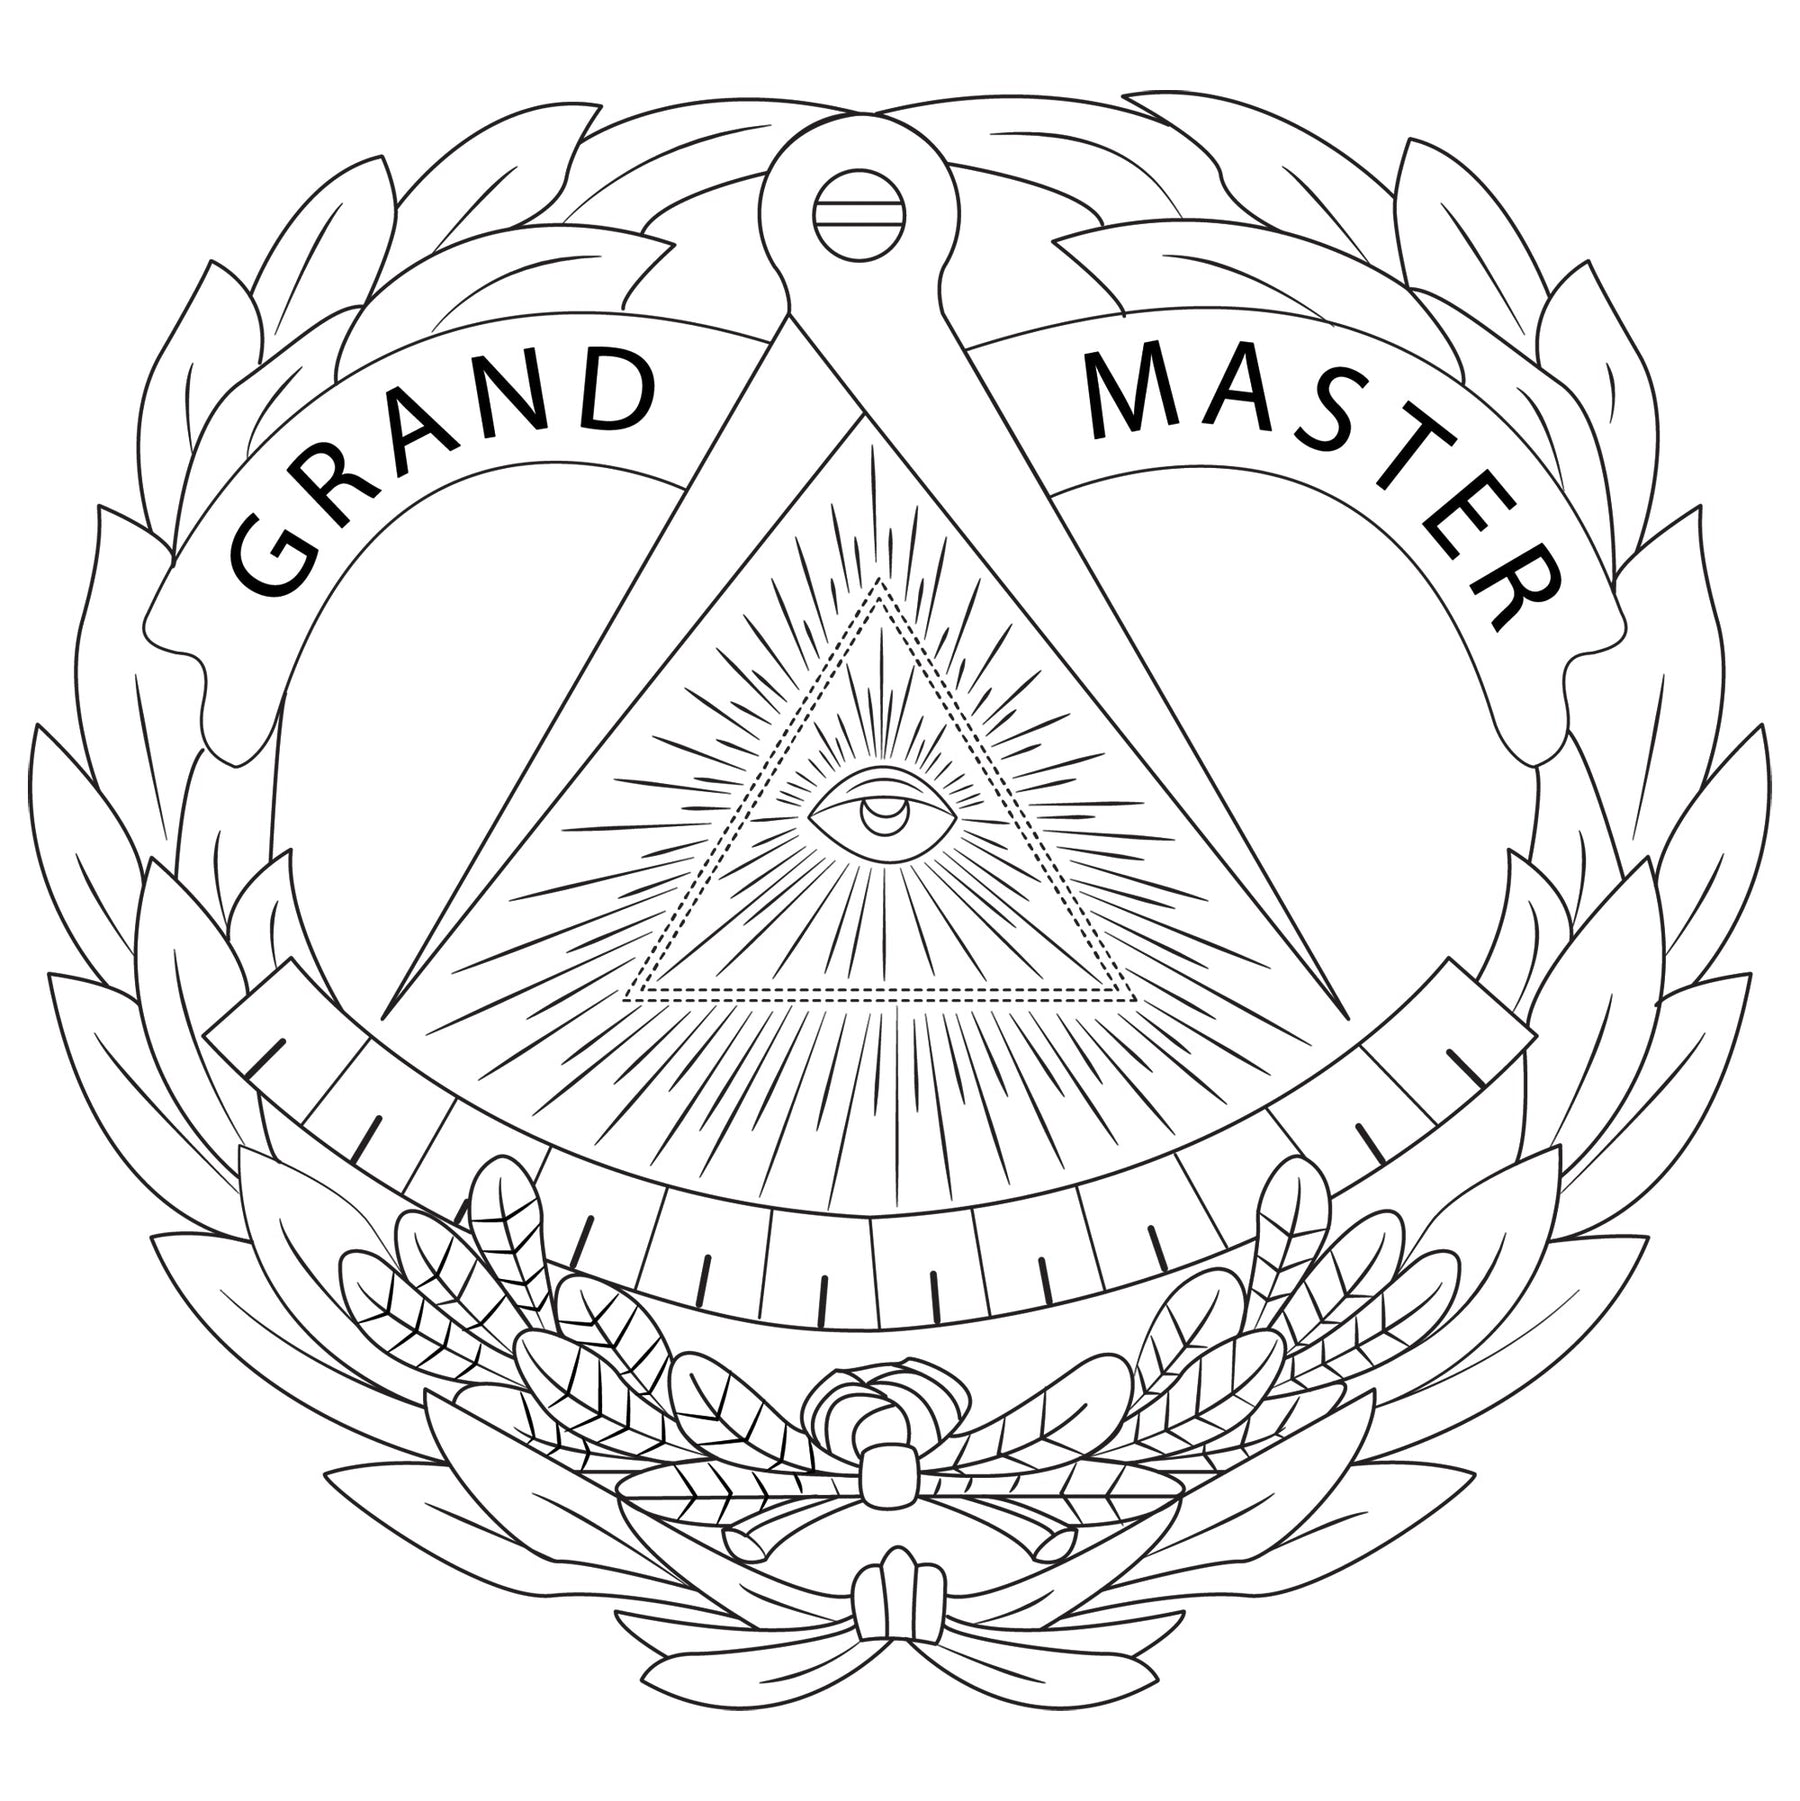 Grand Master Blue Lodge Ring - Blue Tungsten - Bricks Masons